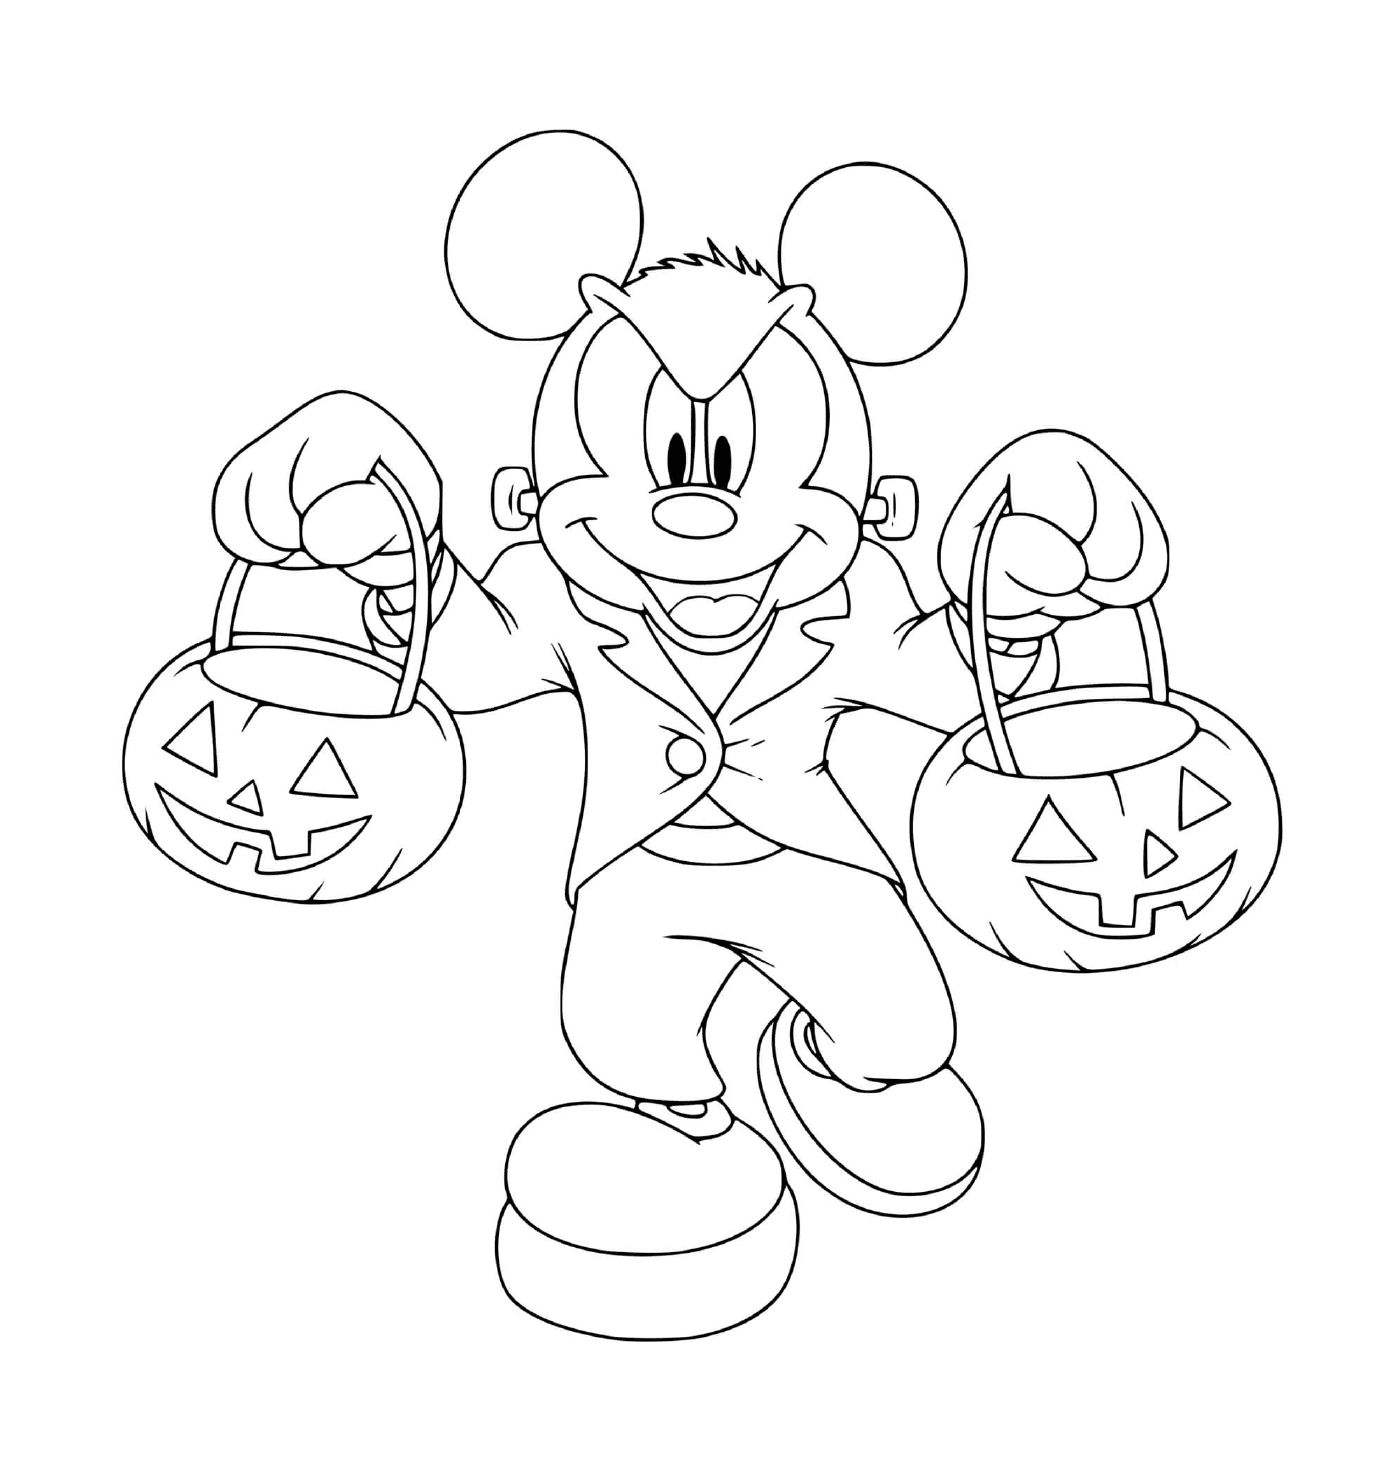  Mickey Mouse Frankenstein monstro zumbi 